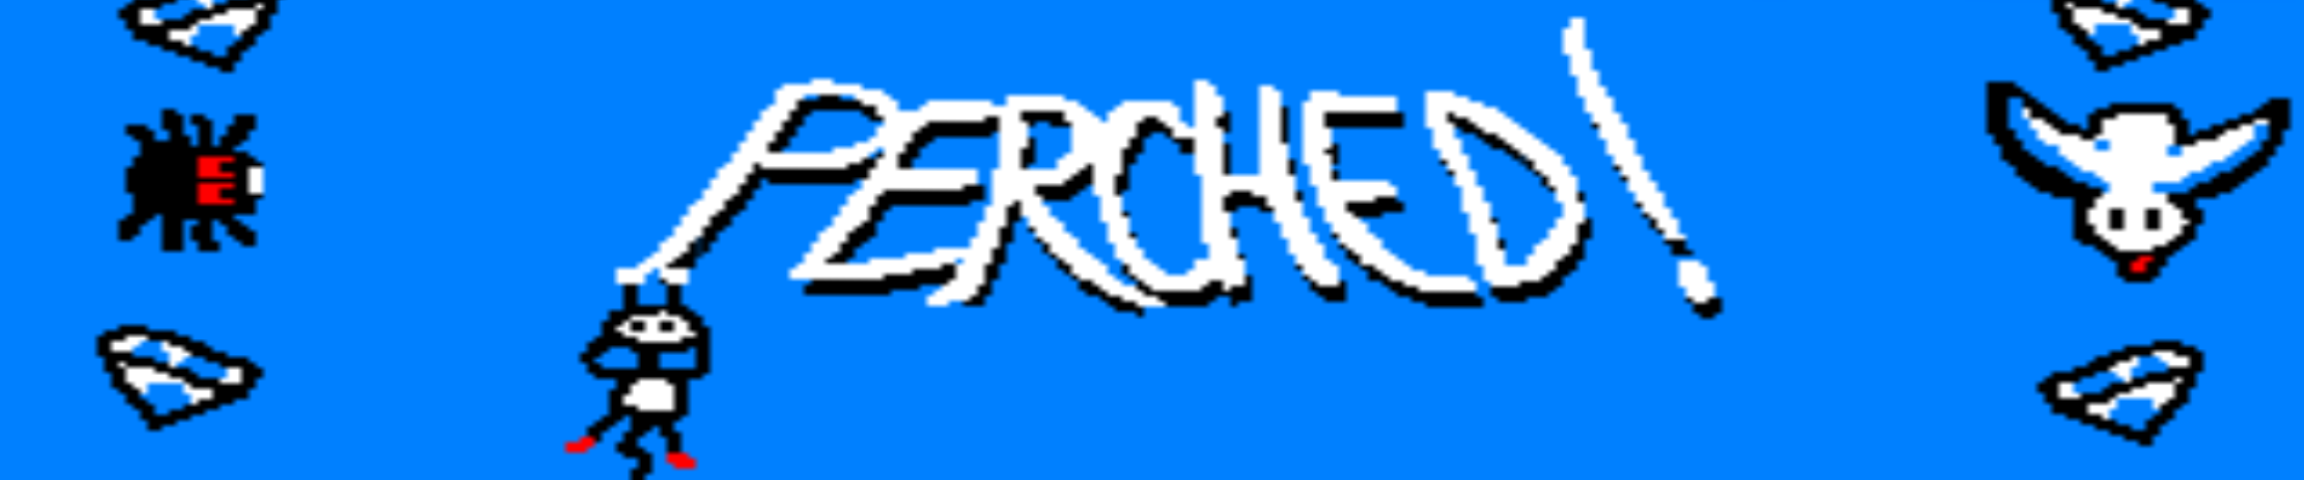 Perched!(Amstrad version)